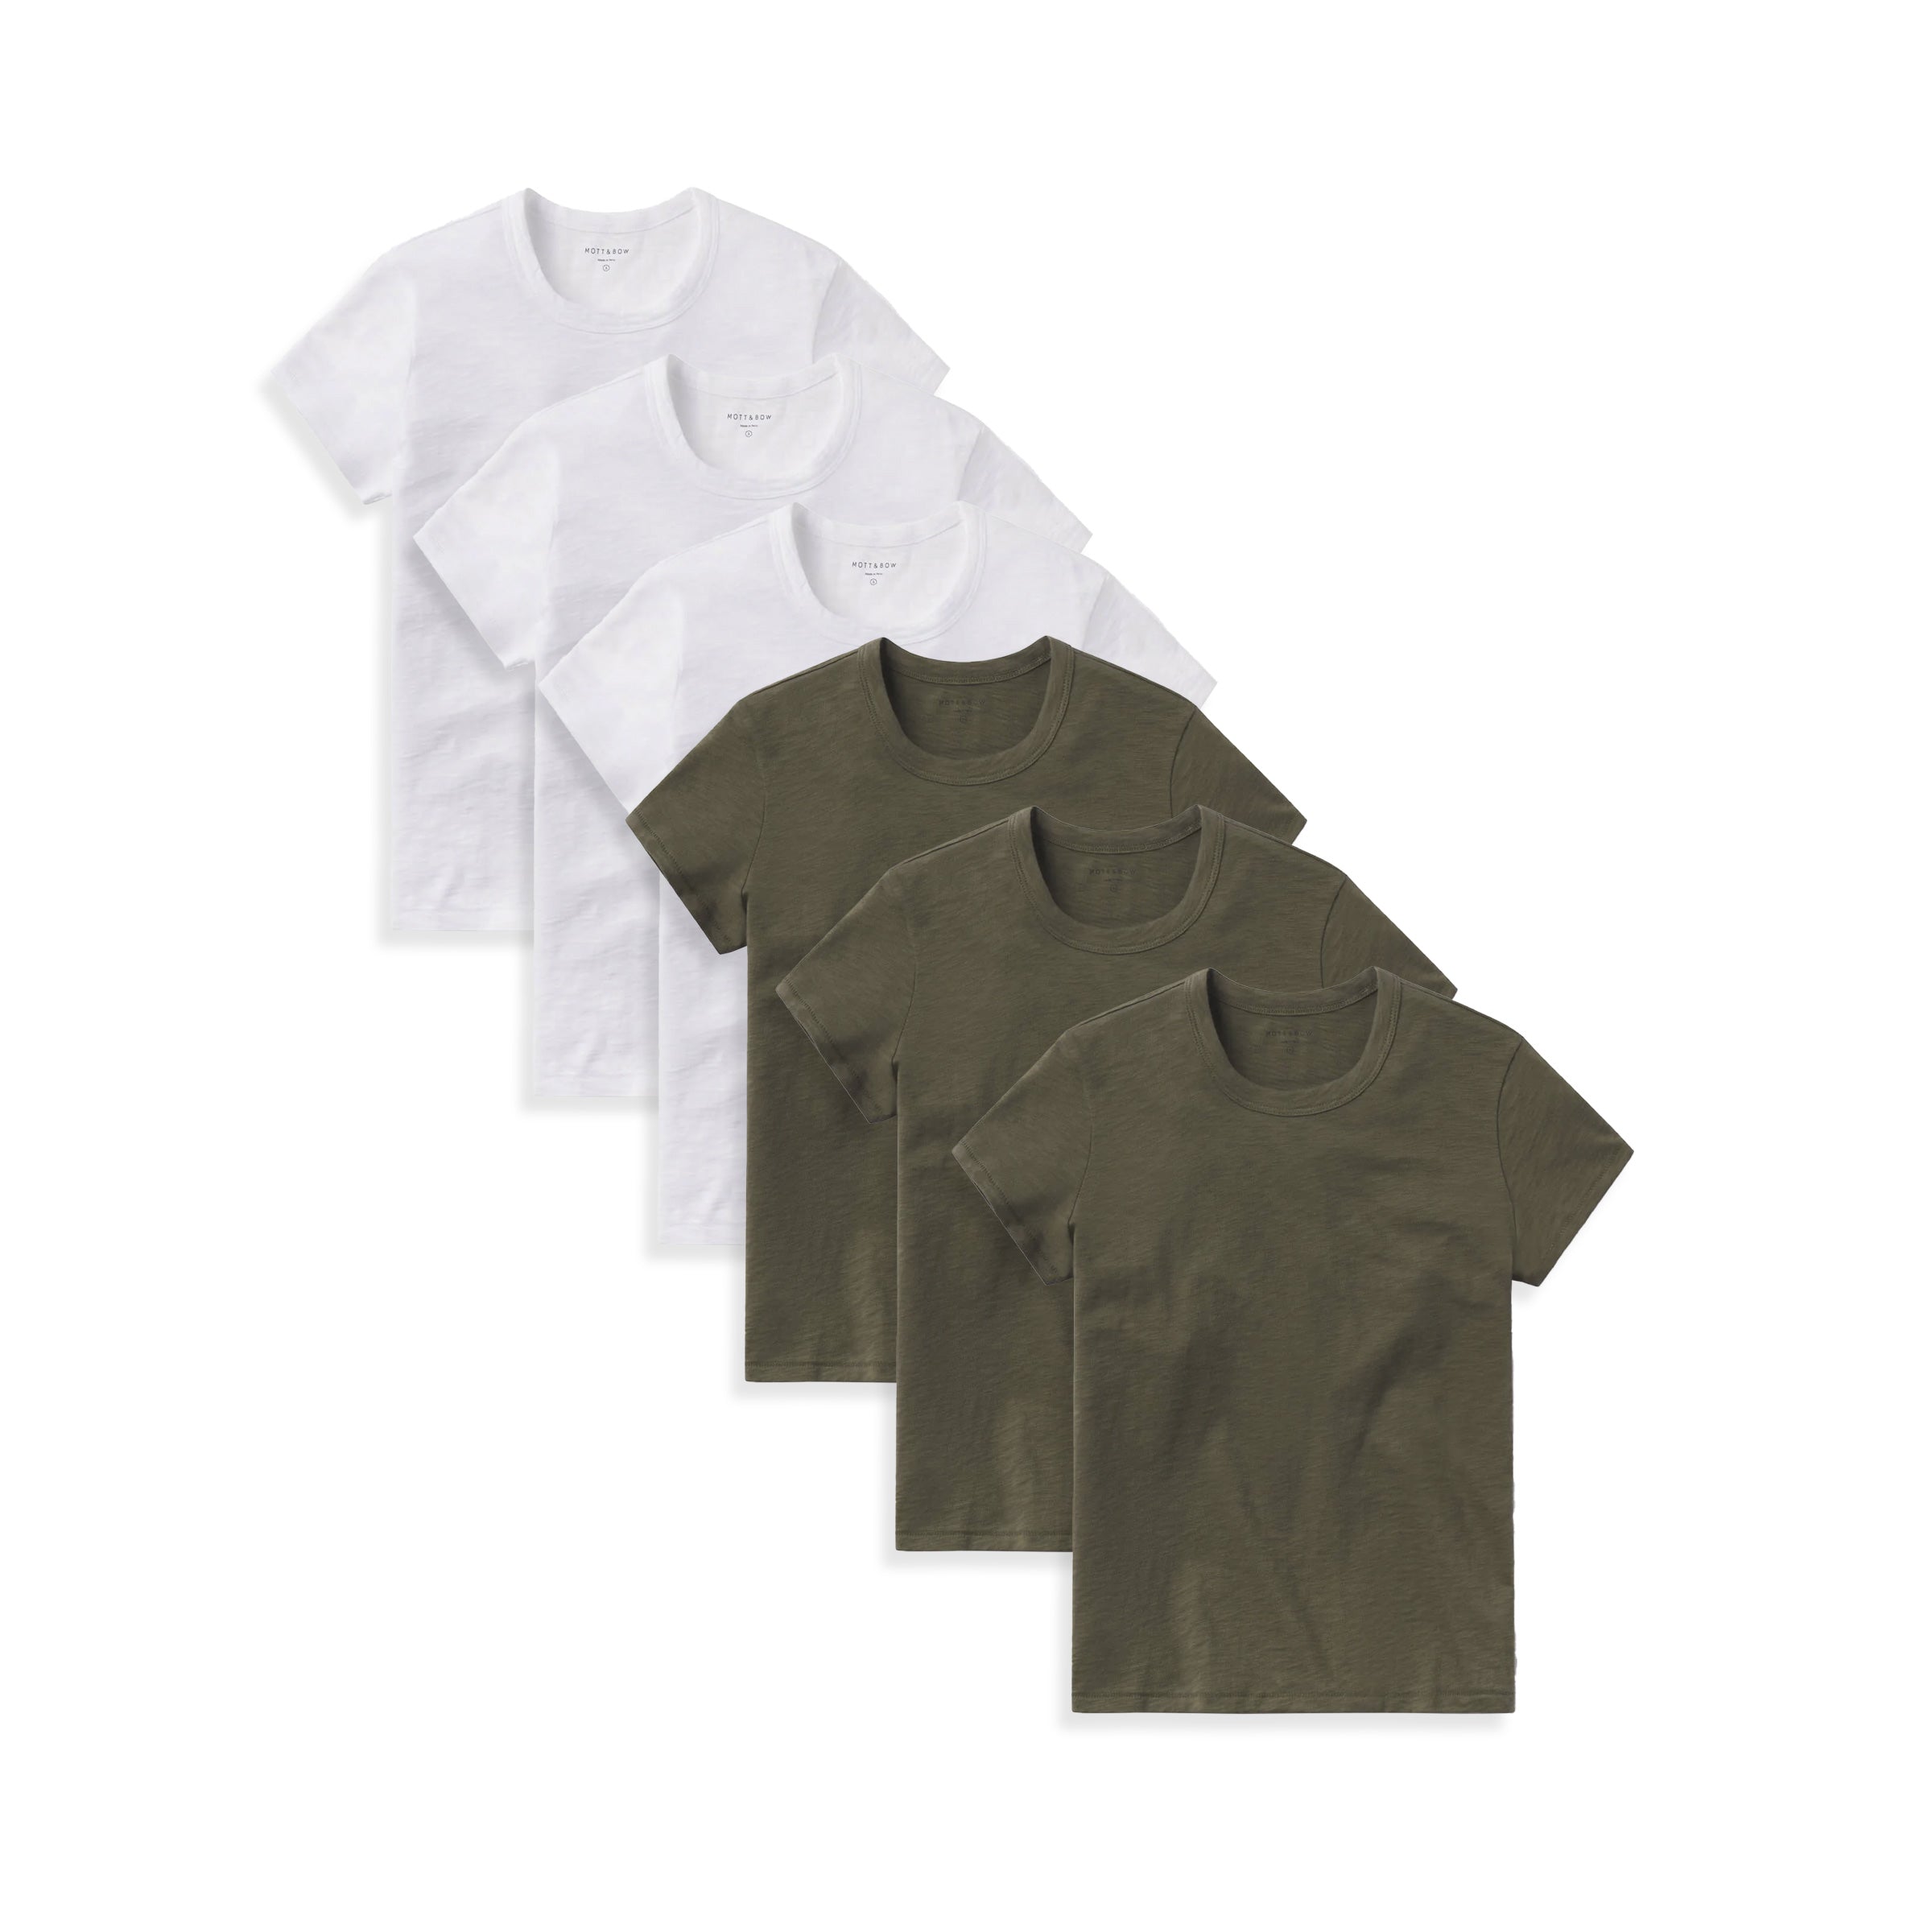 Women wearing White/Military Green Classic Crew Slub 6-Pack tees